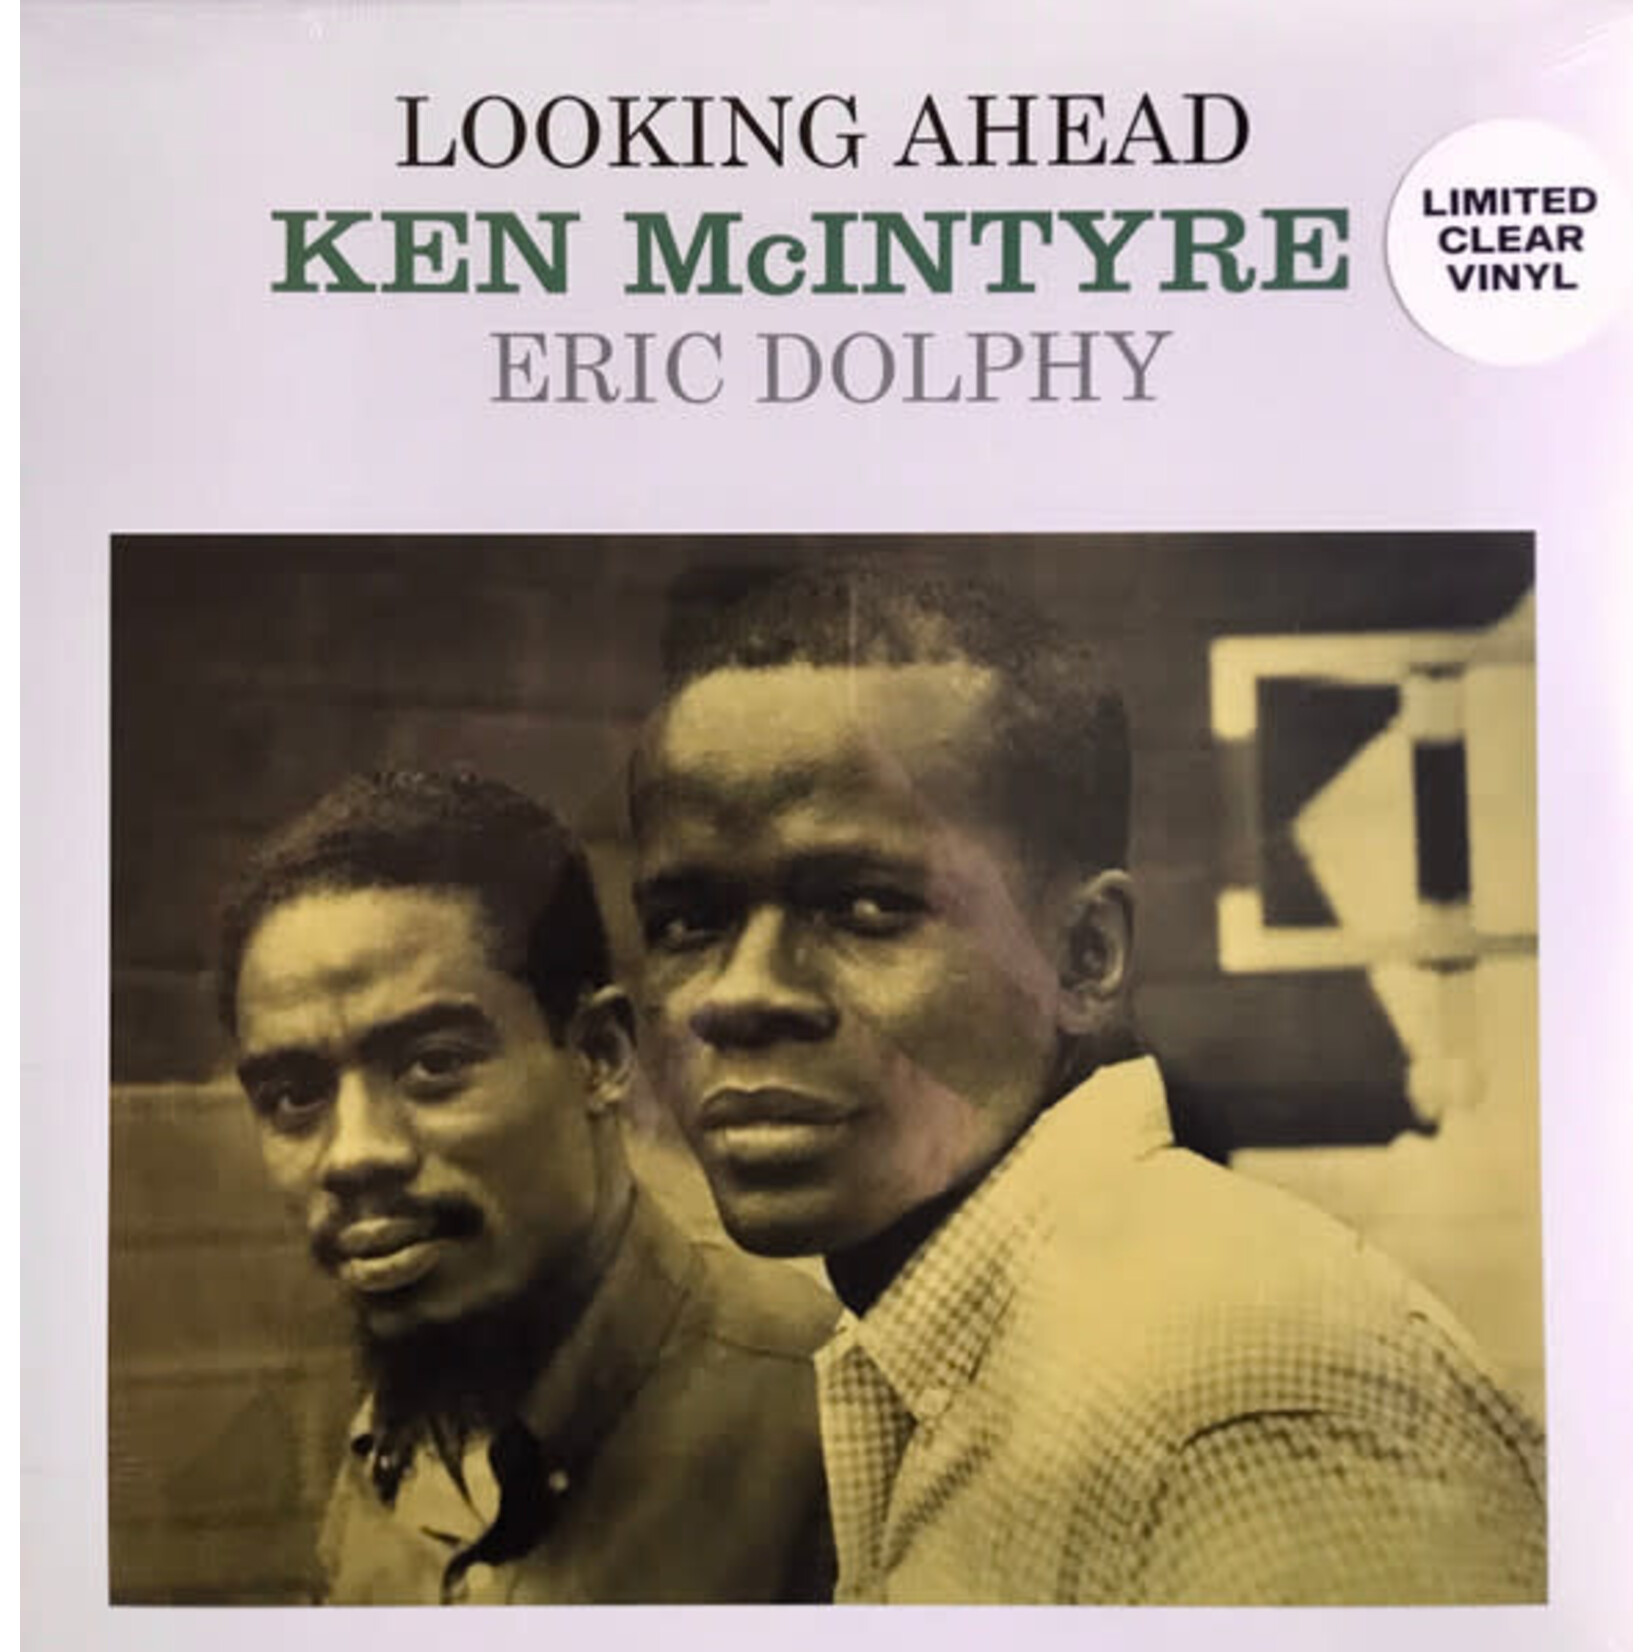 [New] Ken McIntyre & Eric Dolphy - Looking Ahead (clear vinyl)